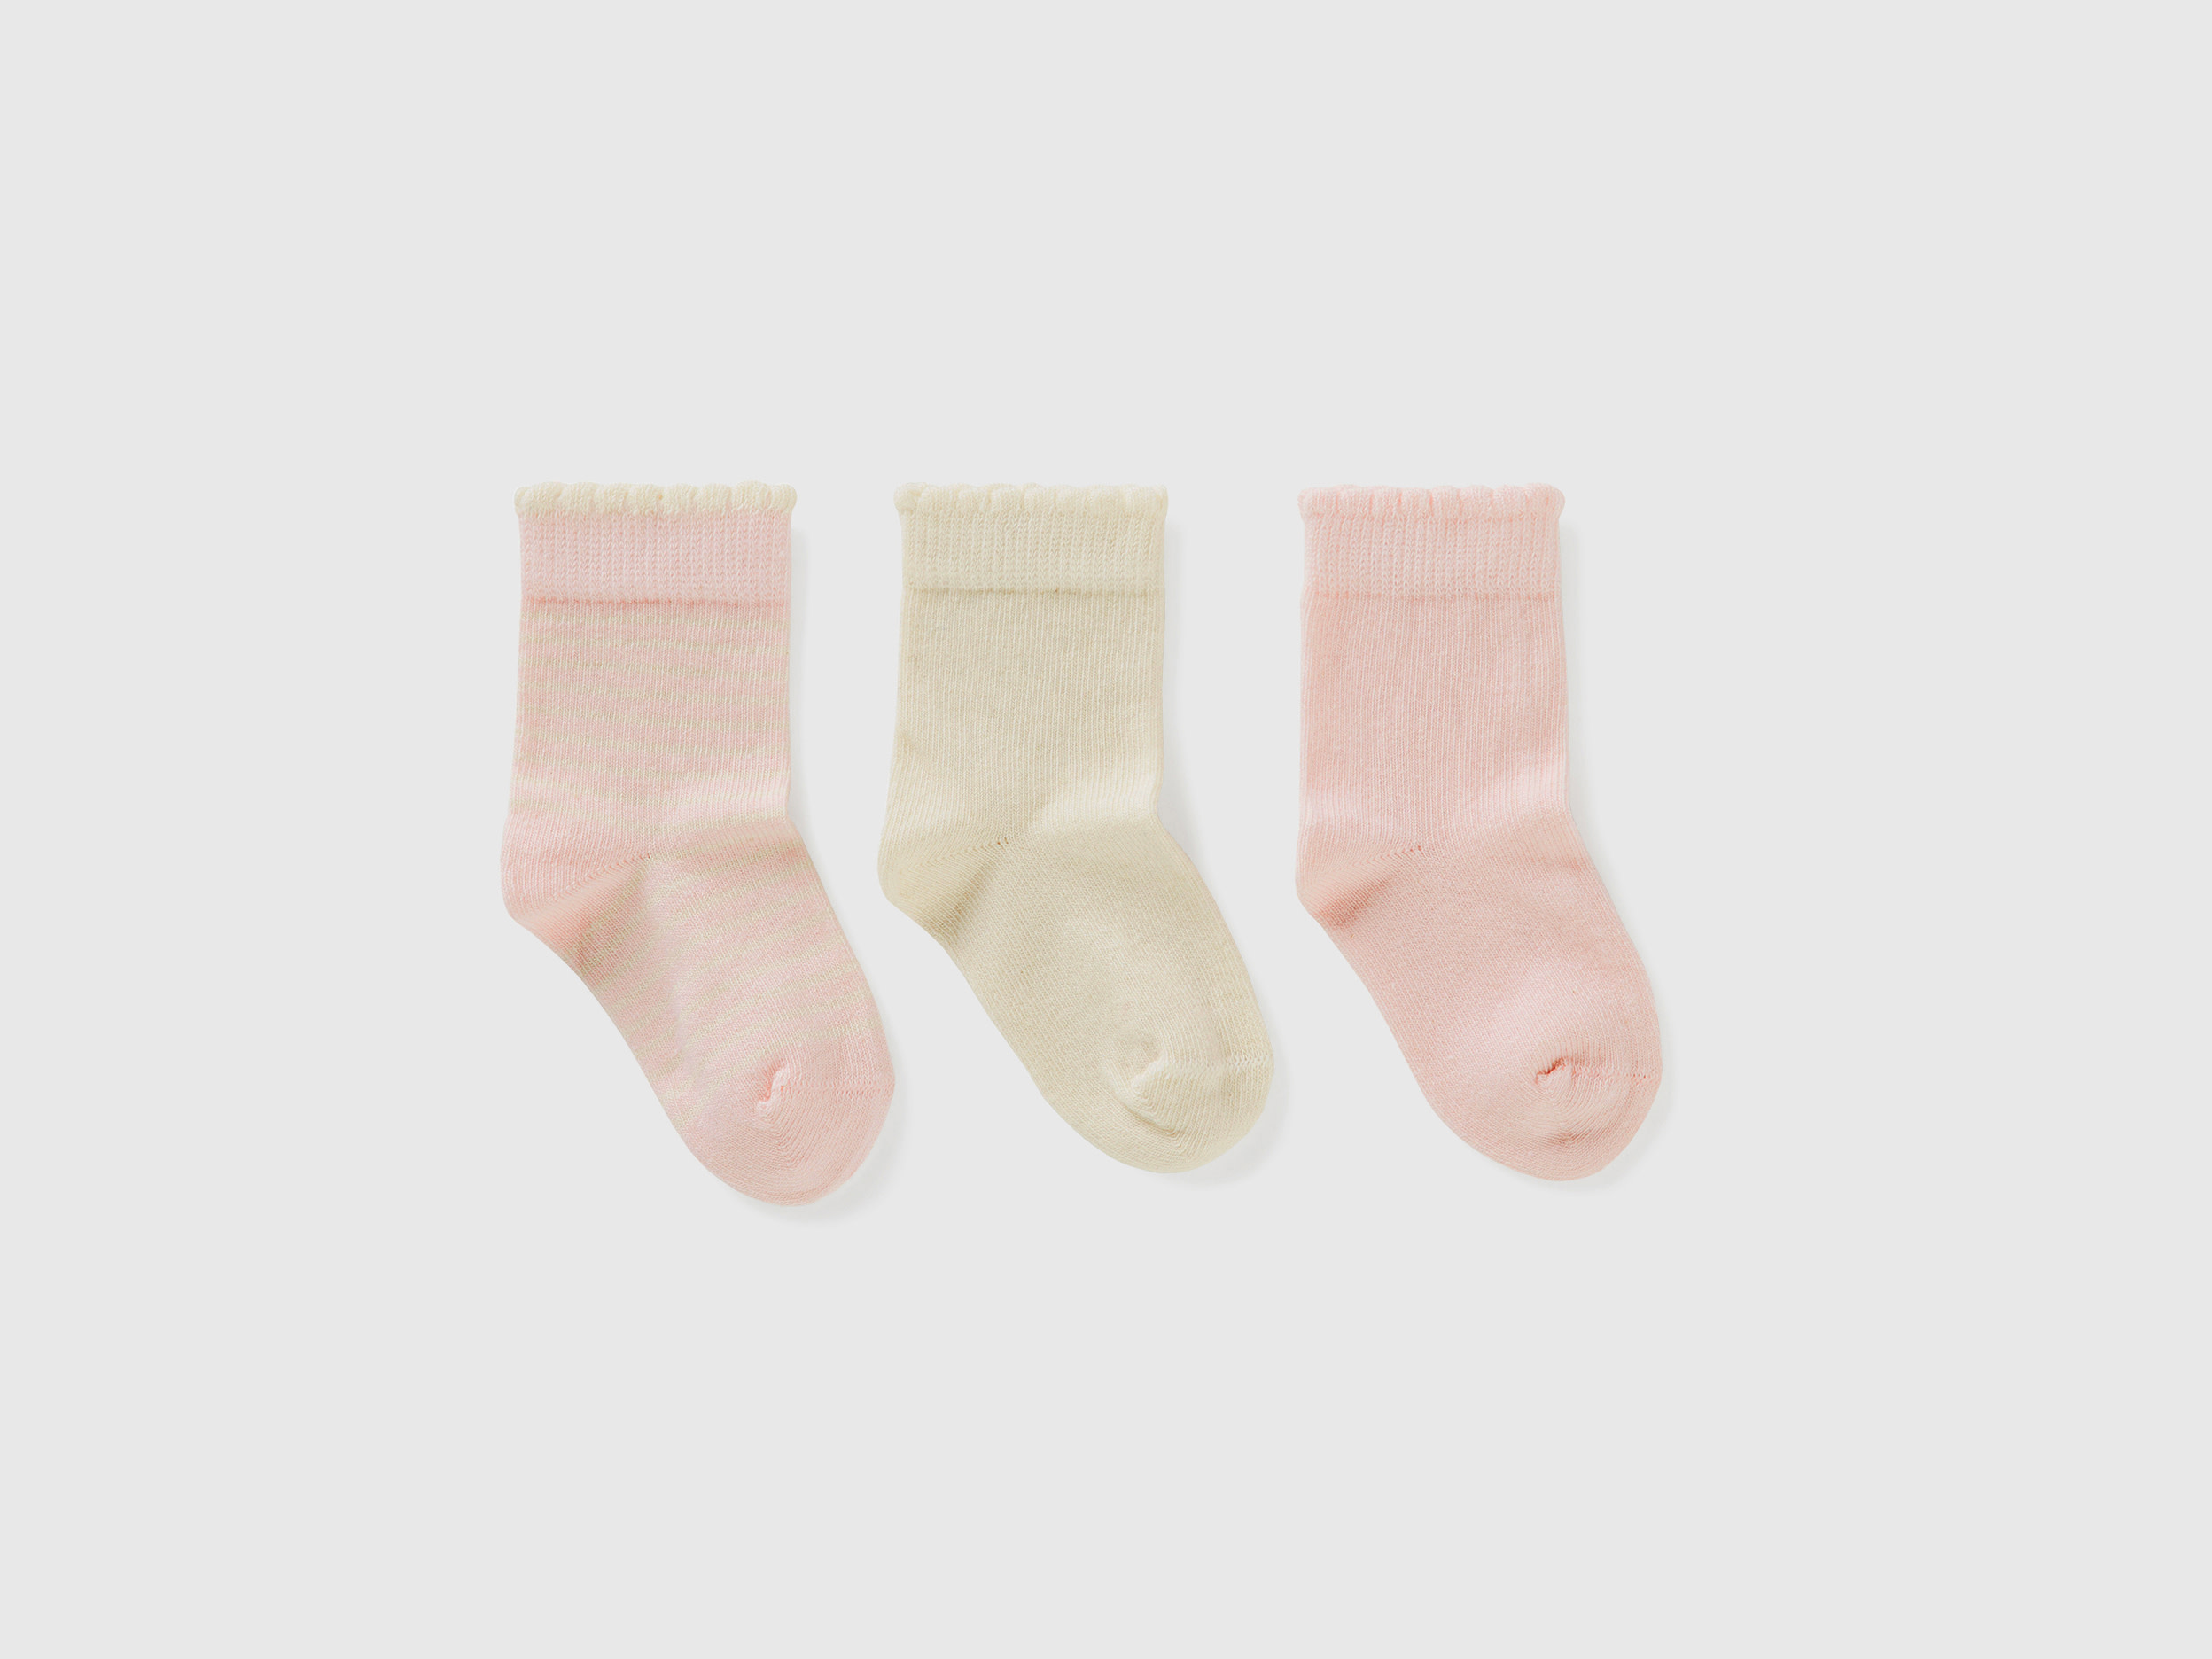 Benetton, Sock Set In Pink Tones, size 0-6, Multi-color, Kids